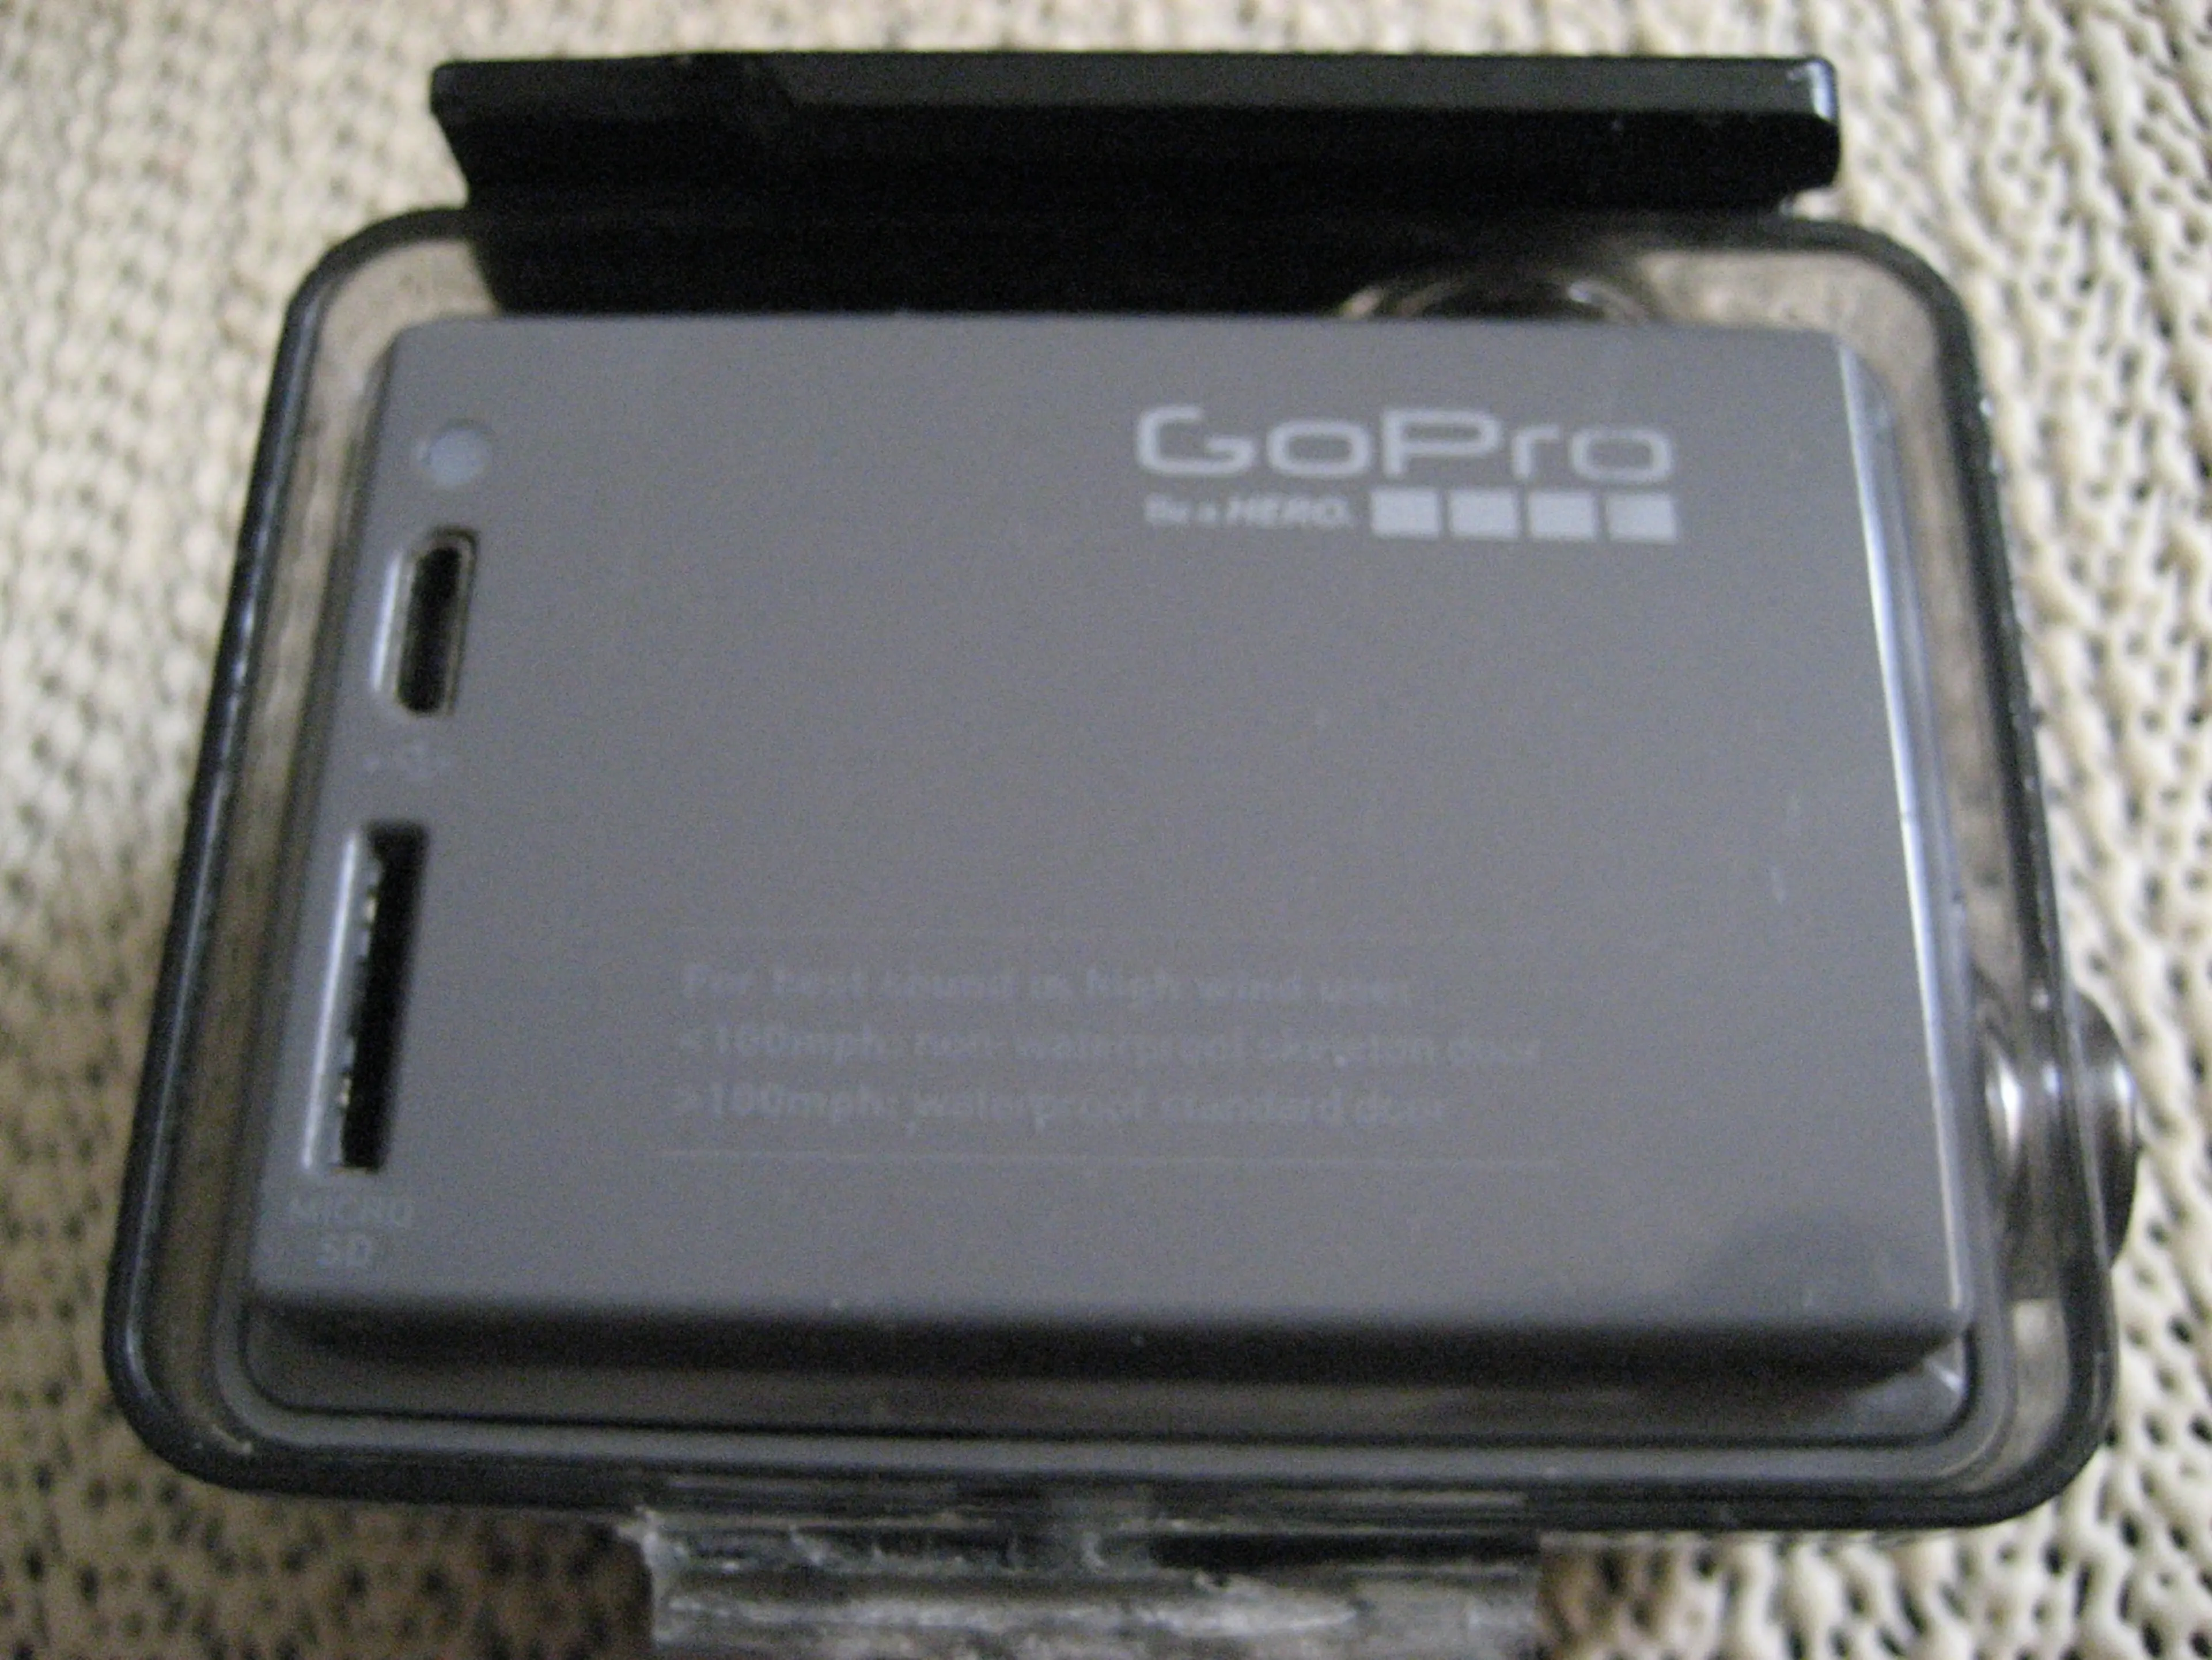 3. Camera actiune GoPro Hero+ ( model 2015) Full HD, Bluetooth + WiFi